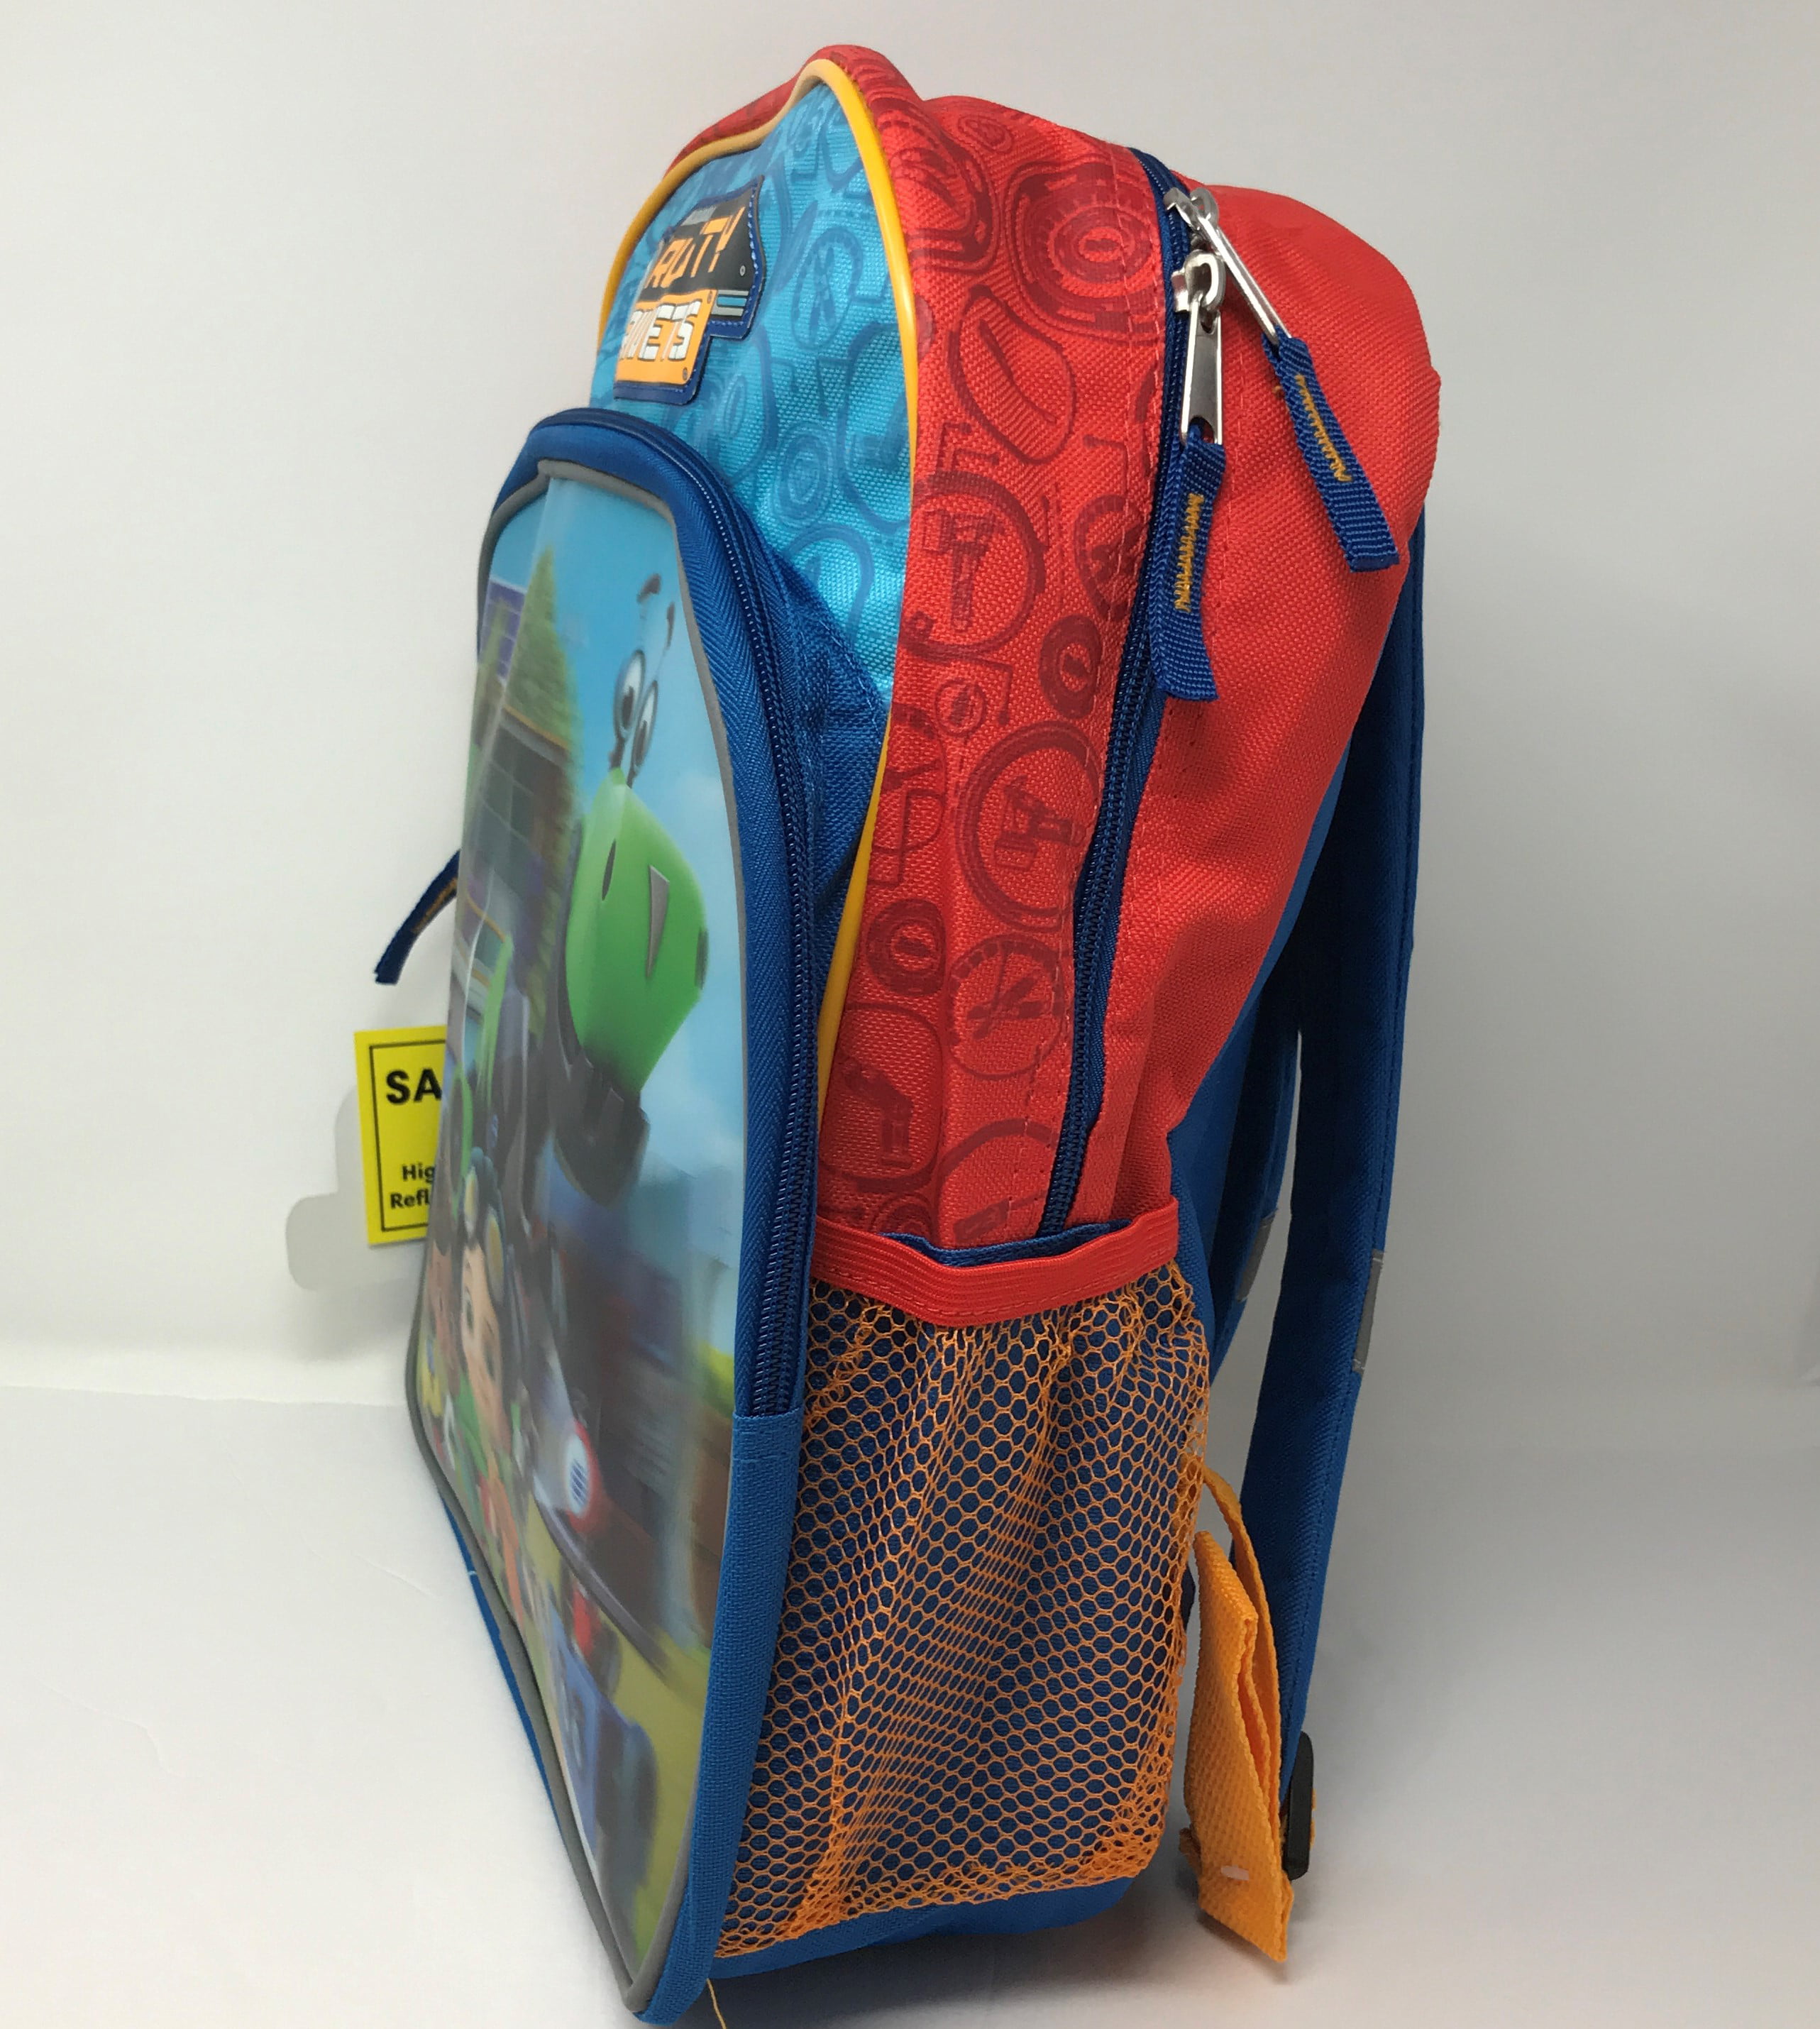 NEW Nickelodeon Rusty Rivets Yard of Gadgets Boys Girls School Bag Backpack